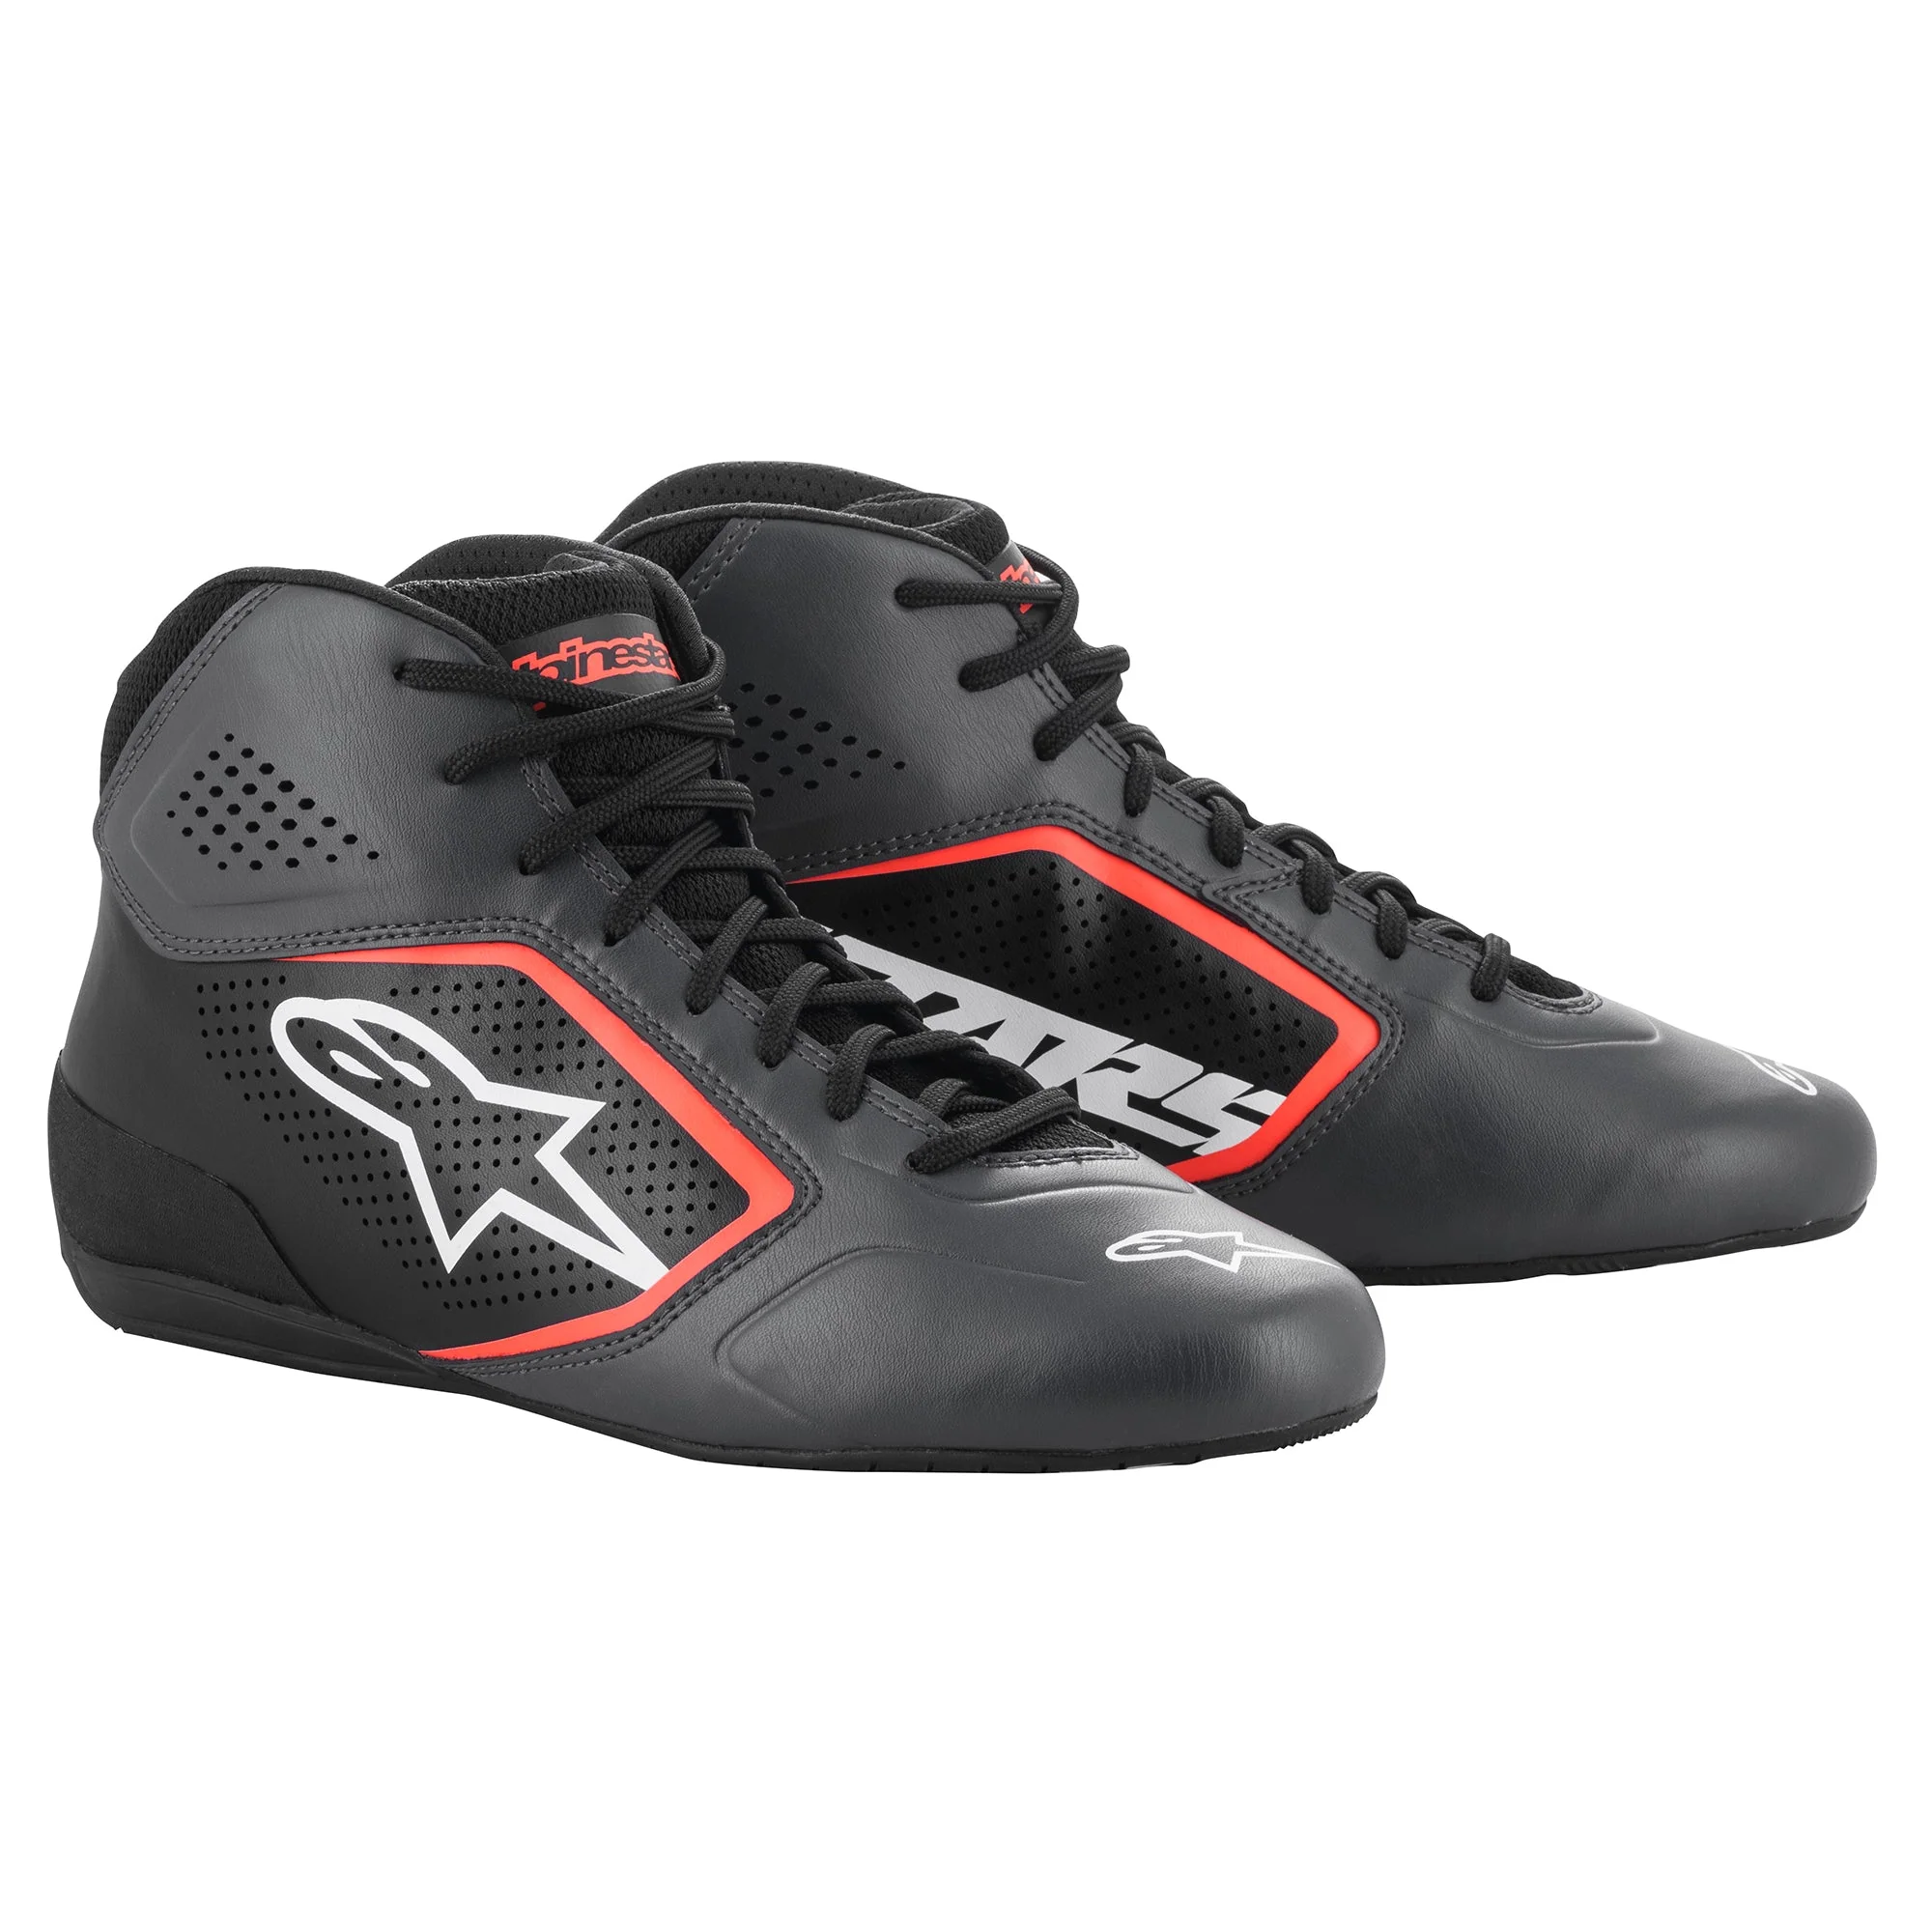 Alpinestars TECH-1 K START v2 ботинки для картинга, черный/белый/красный, р-р 45(EUR)/11.5(US)/10.. DARK-STOCK.RU